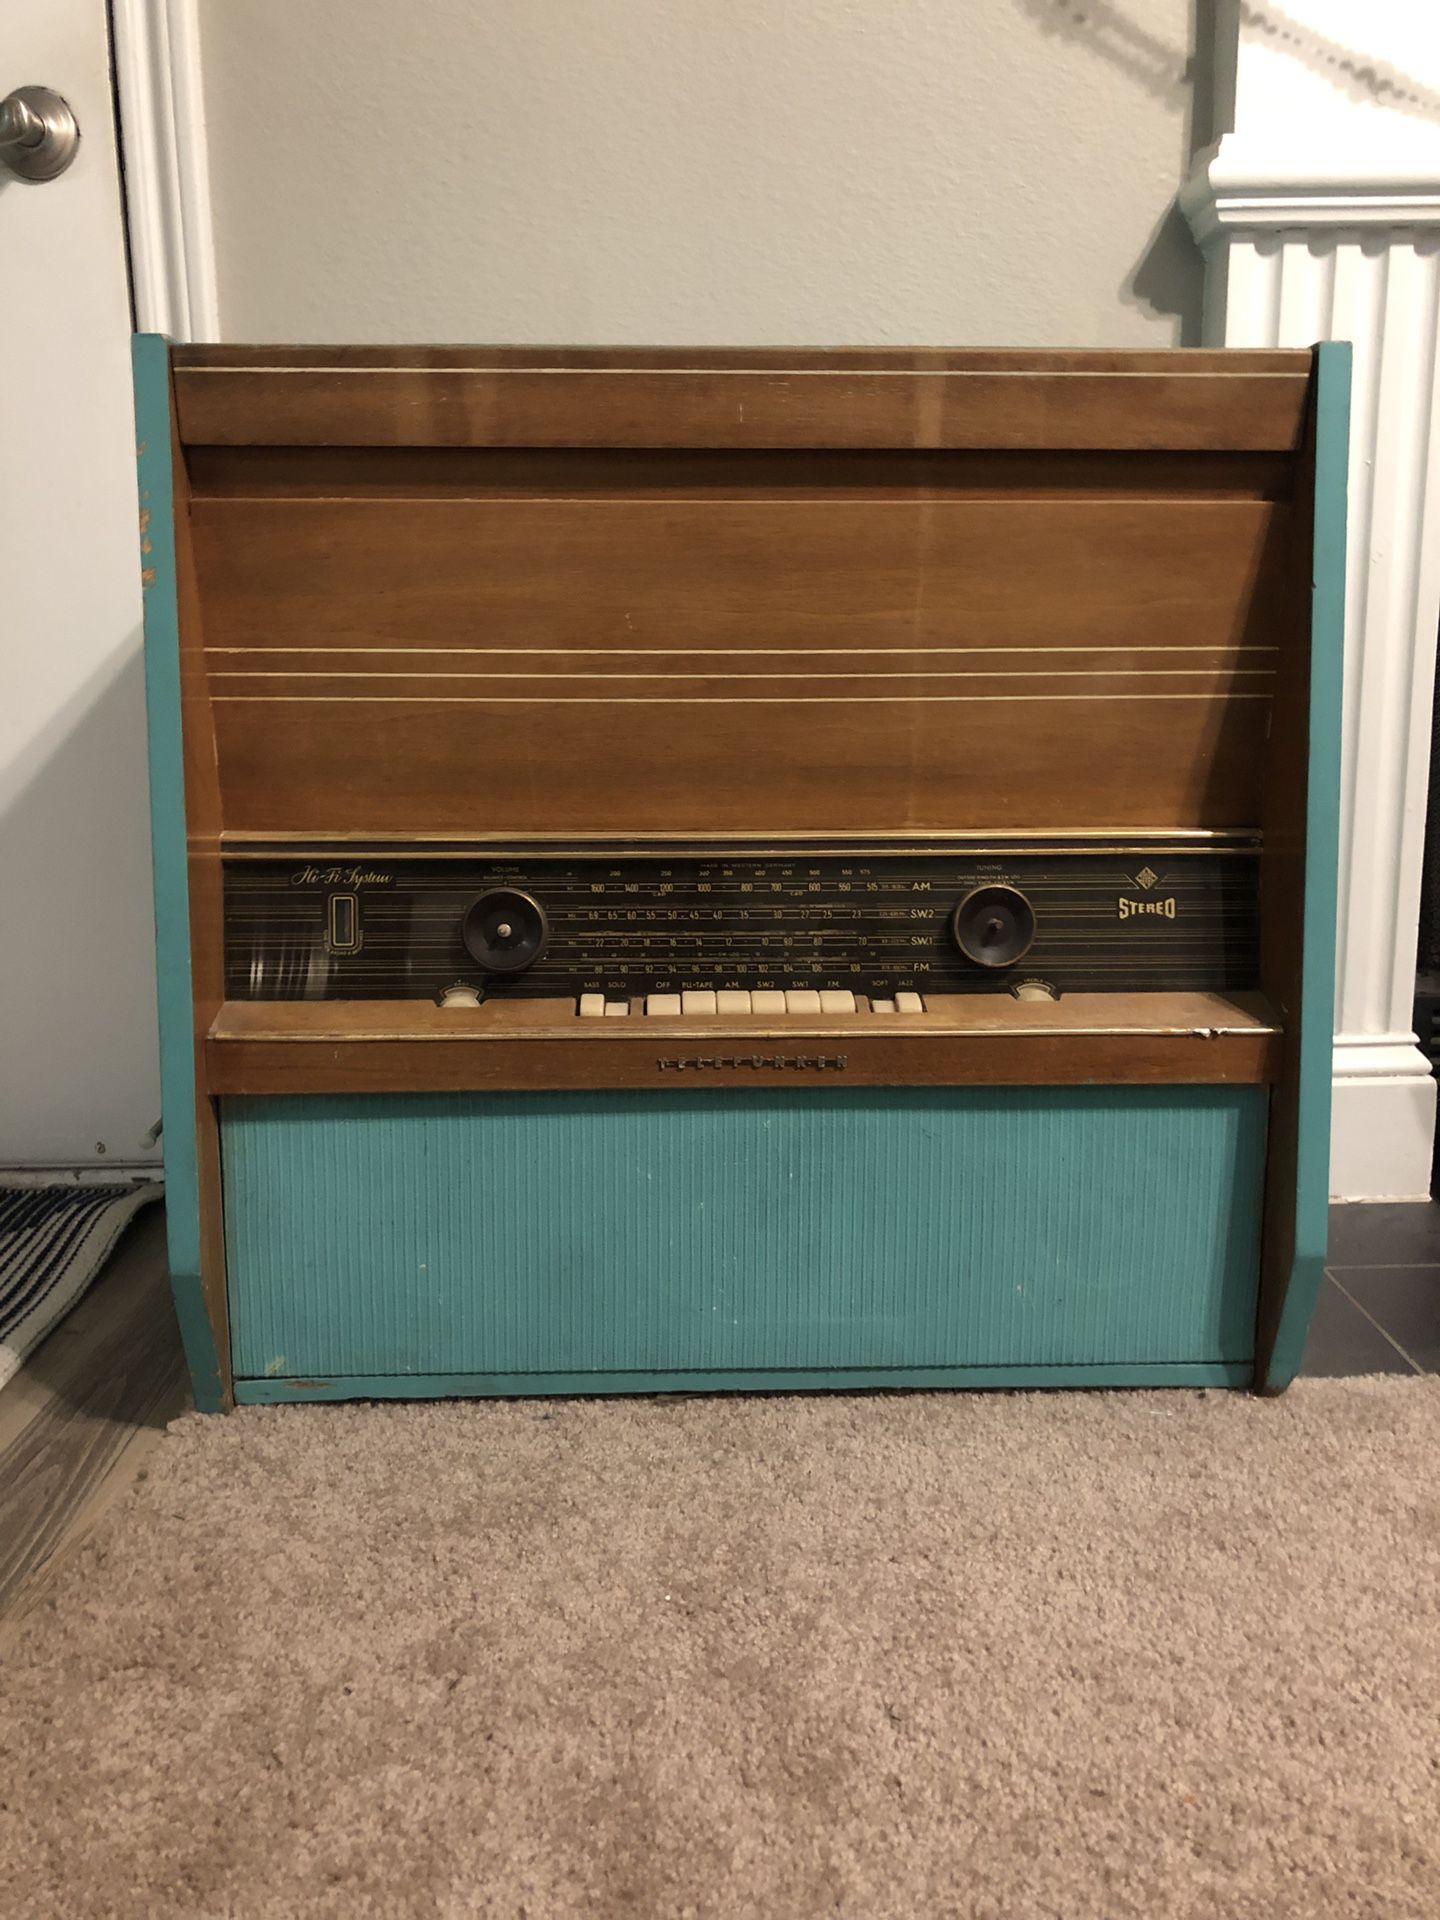 1960s Telefunken stereo console